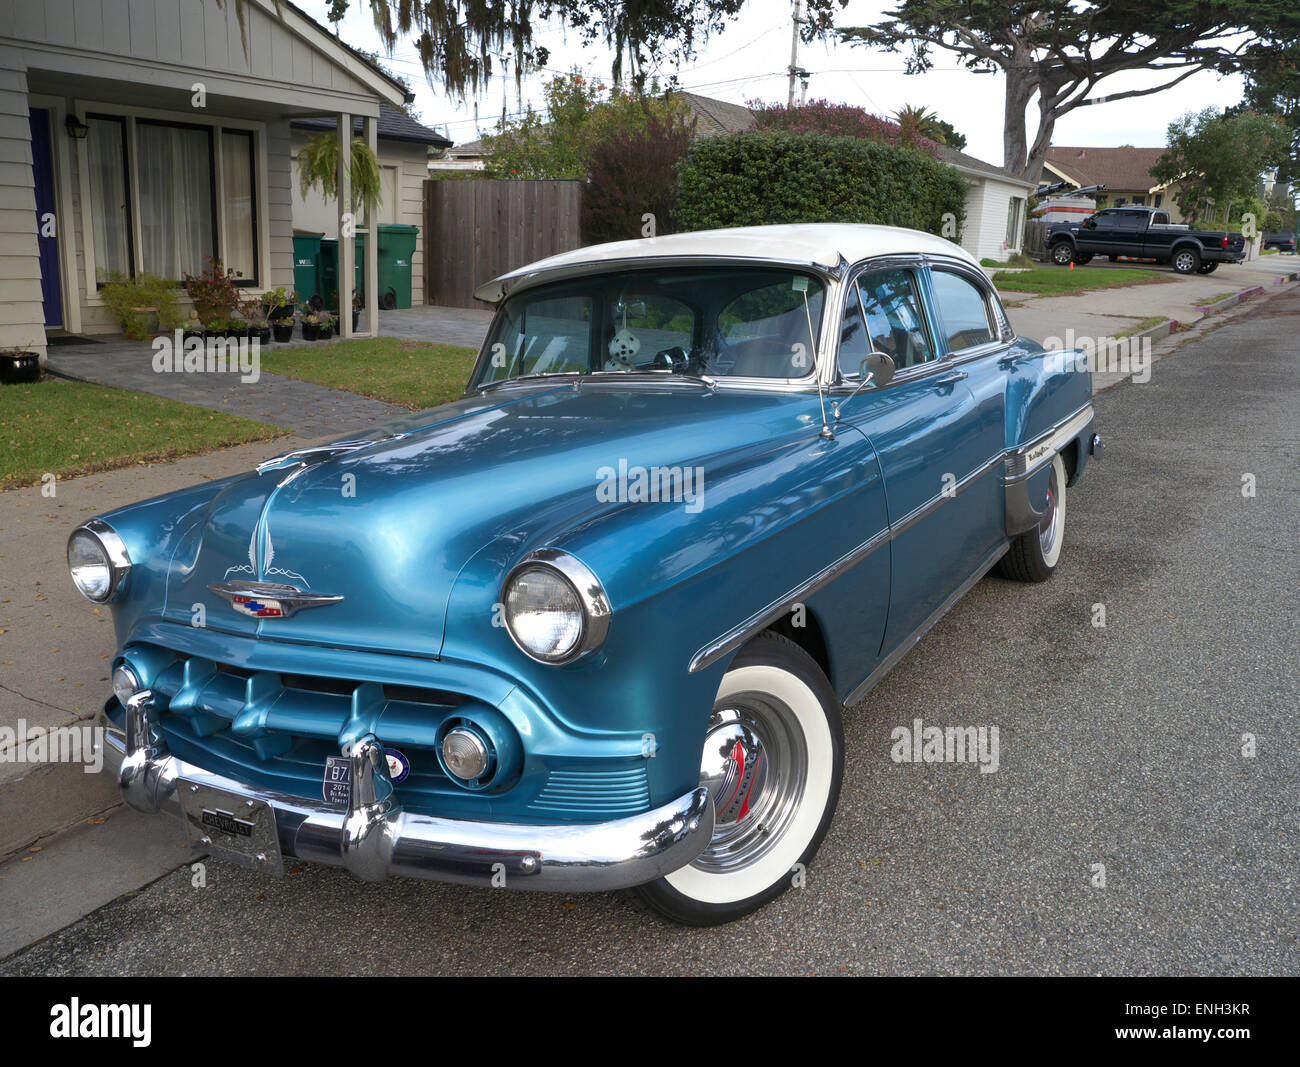 1954 BelAir Chevrolet classic American automobile Pacific Grove Monterey California USA Stock Photo